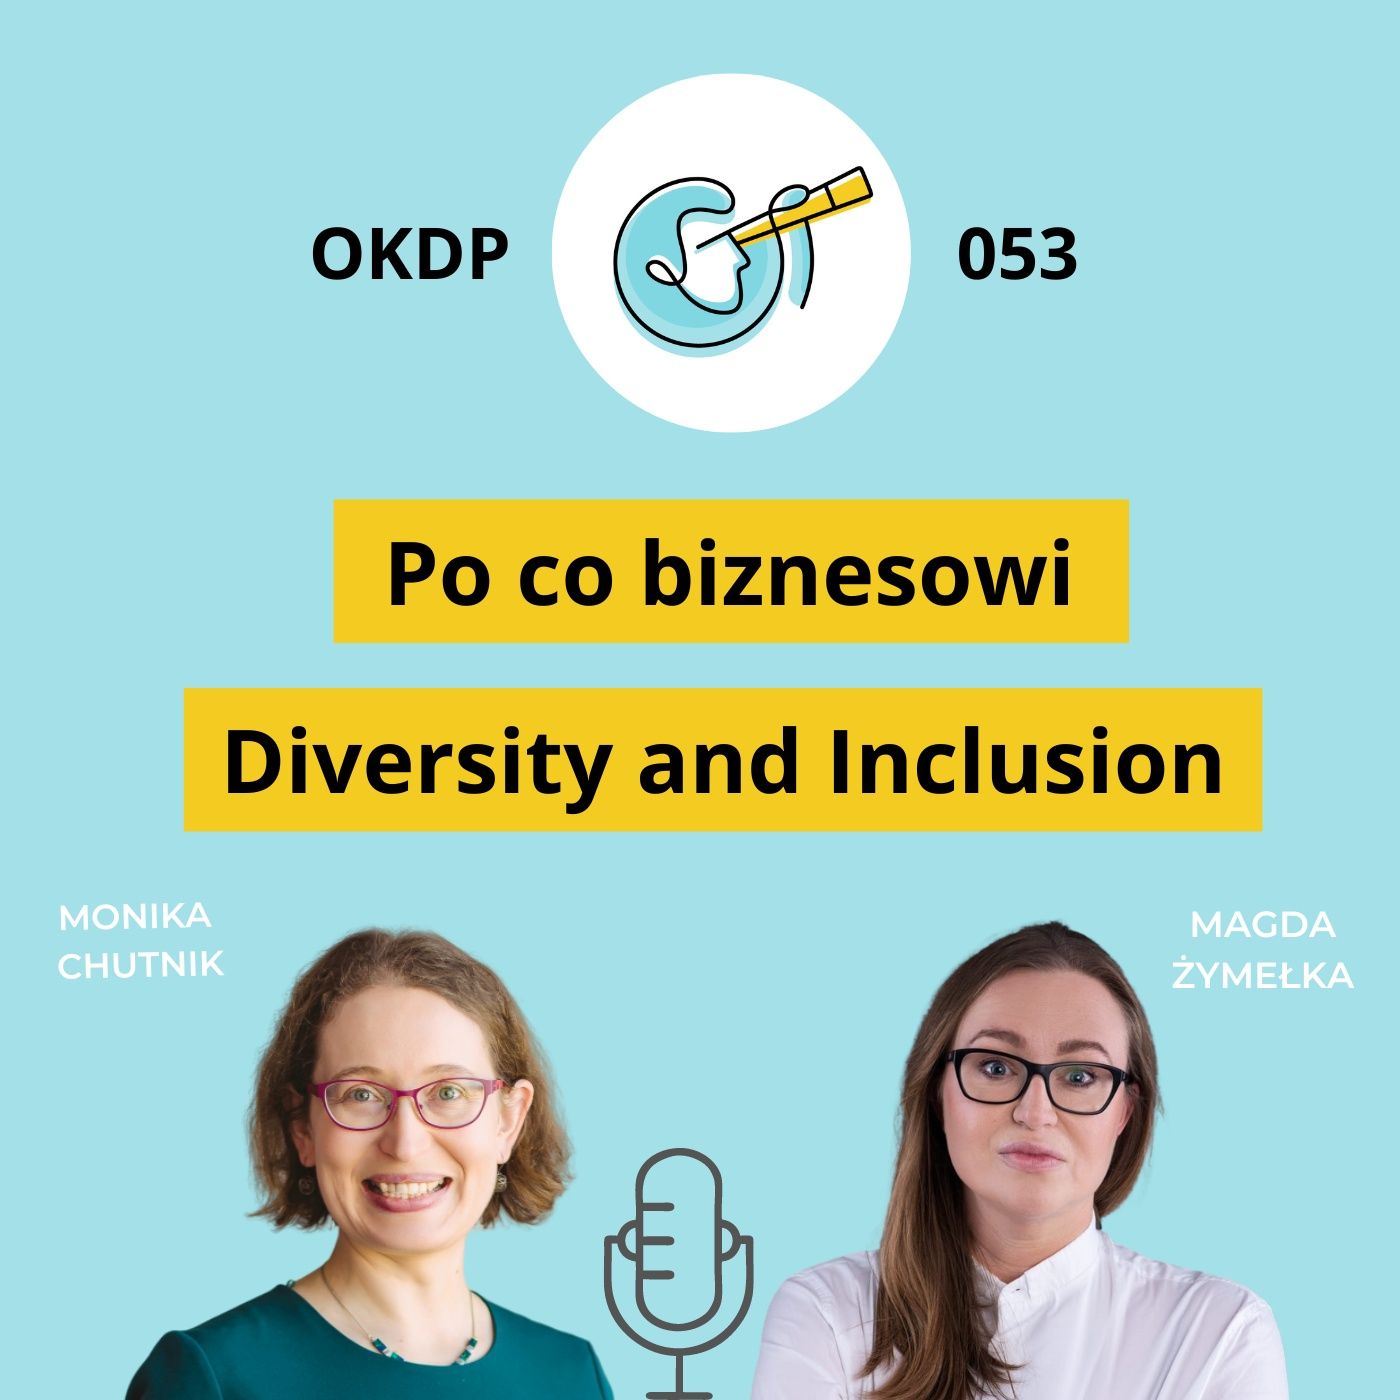 OKDP 053: Po co biznesowi Diversity and Inclusion